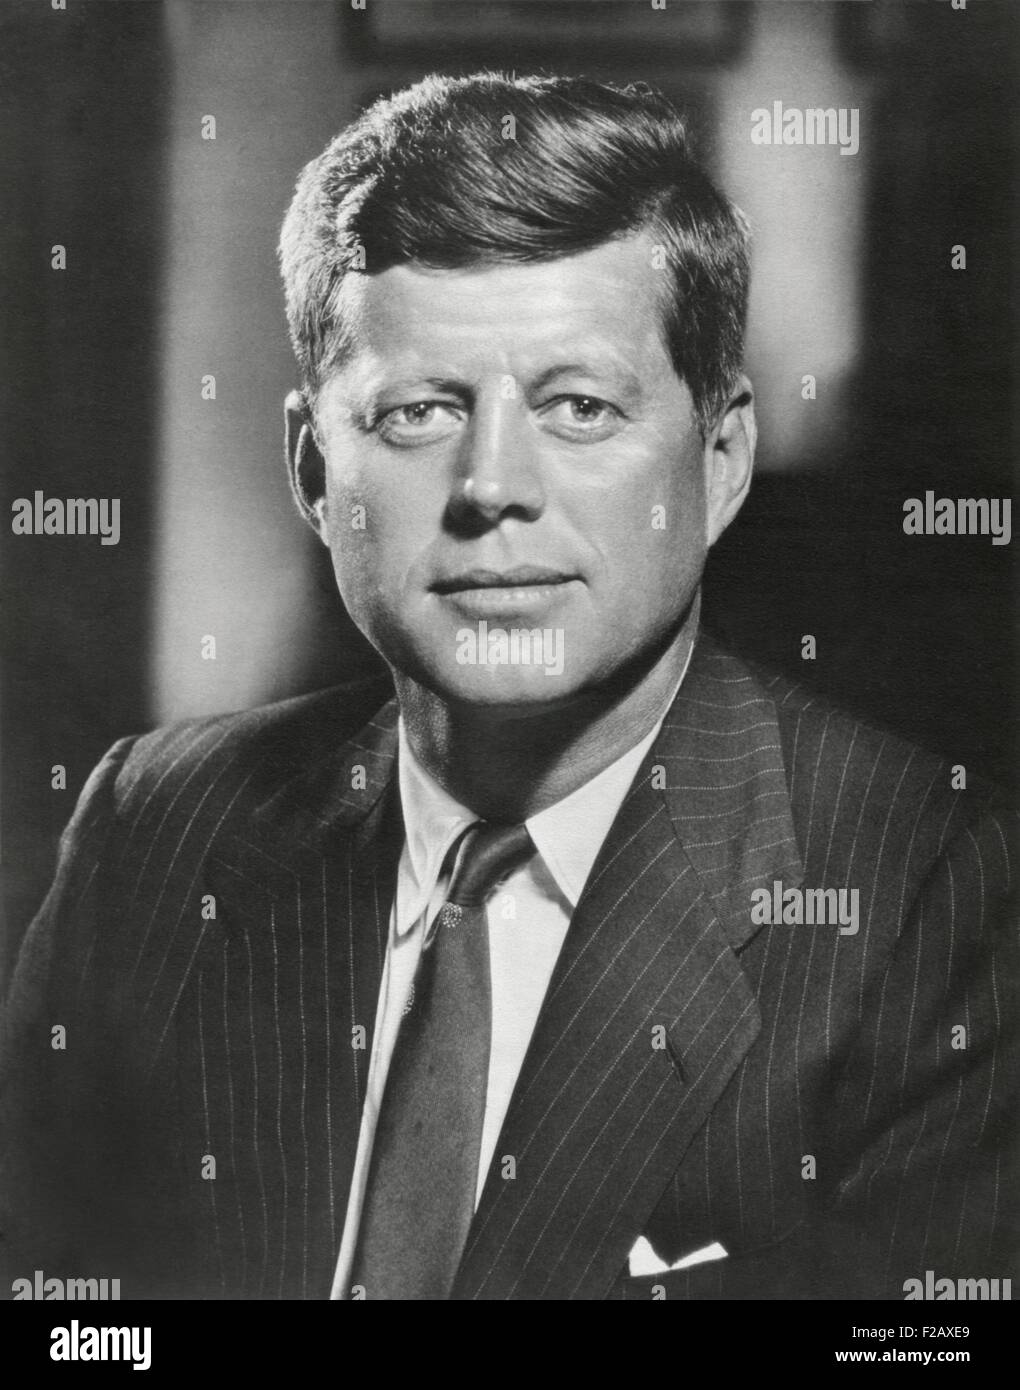 President John Kennedy. Portrait taken by Bachrach, ca. 1960-61. (BSLOC 2015 2 223) Stock Photo